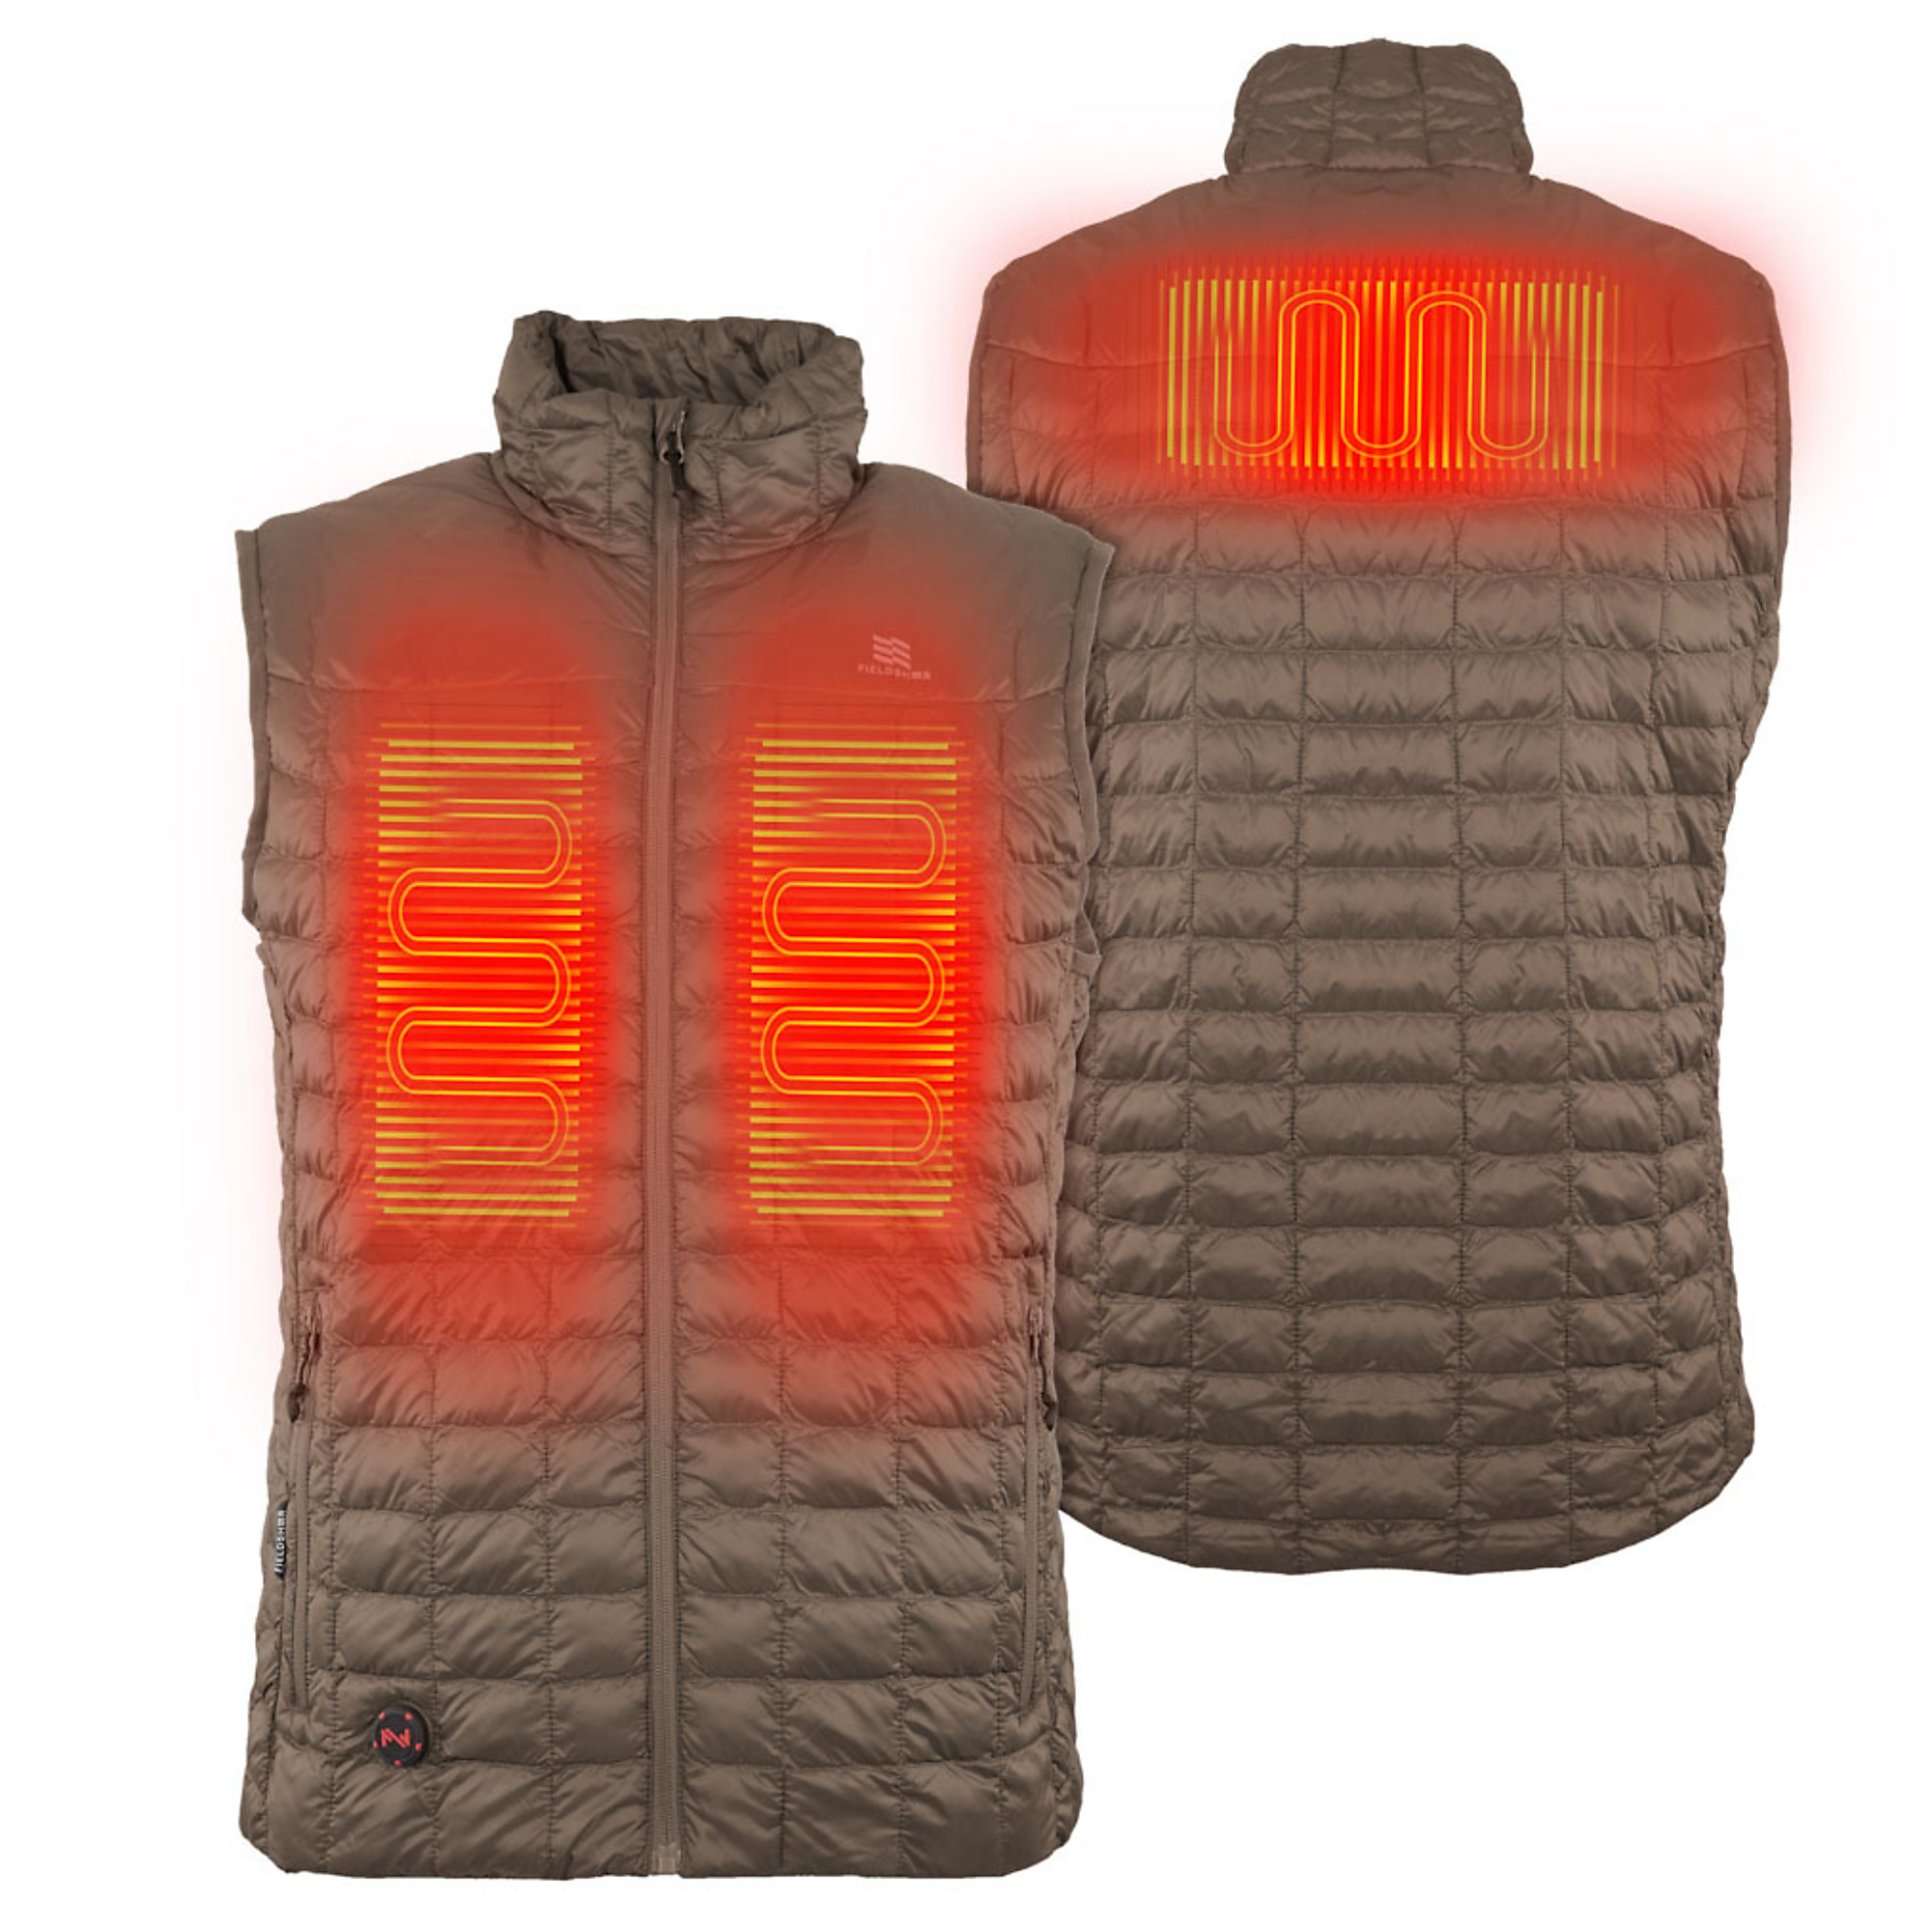 Fieldsheer, Men's Backcountry Heated Vest with 7.4v Battery, Size L, Color Tan, Model MWMV04340421